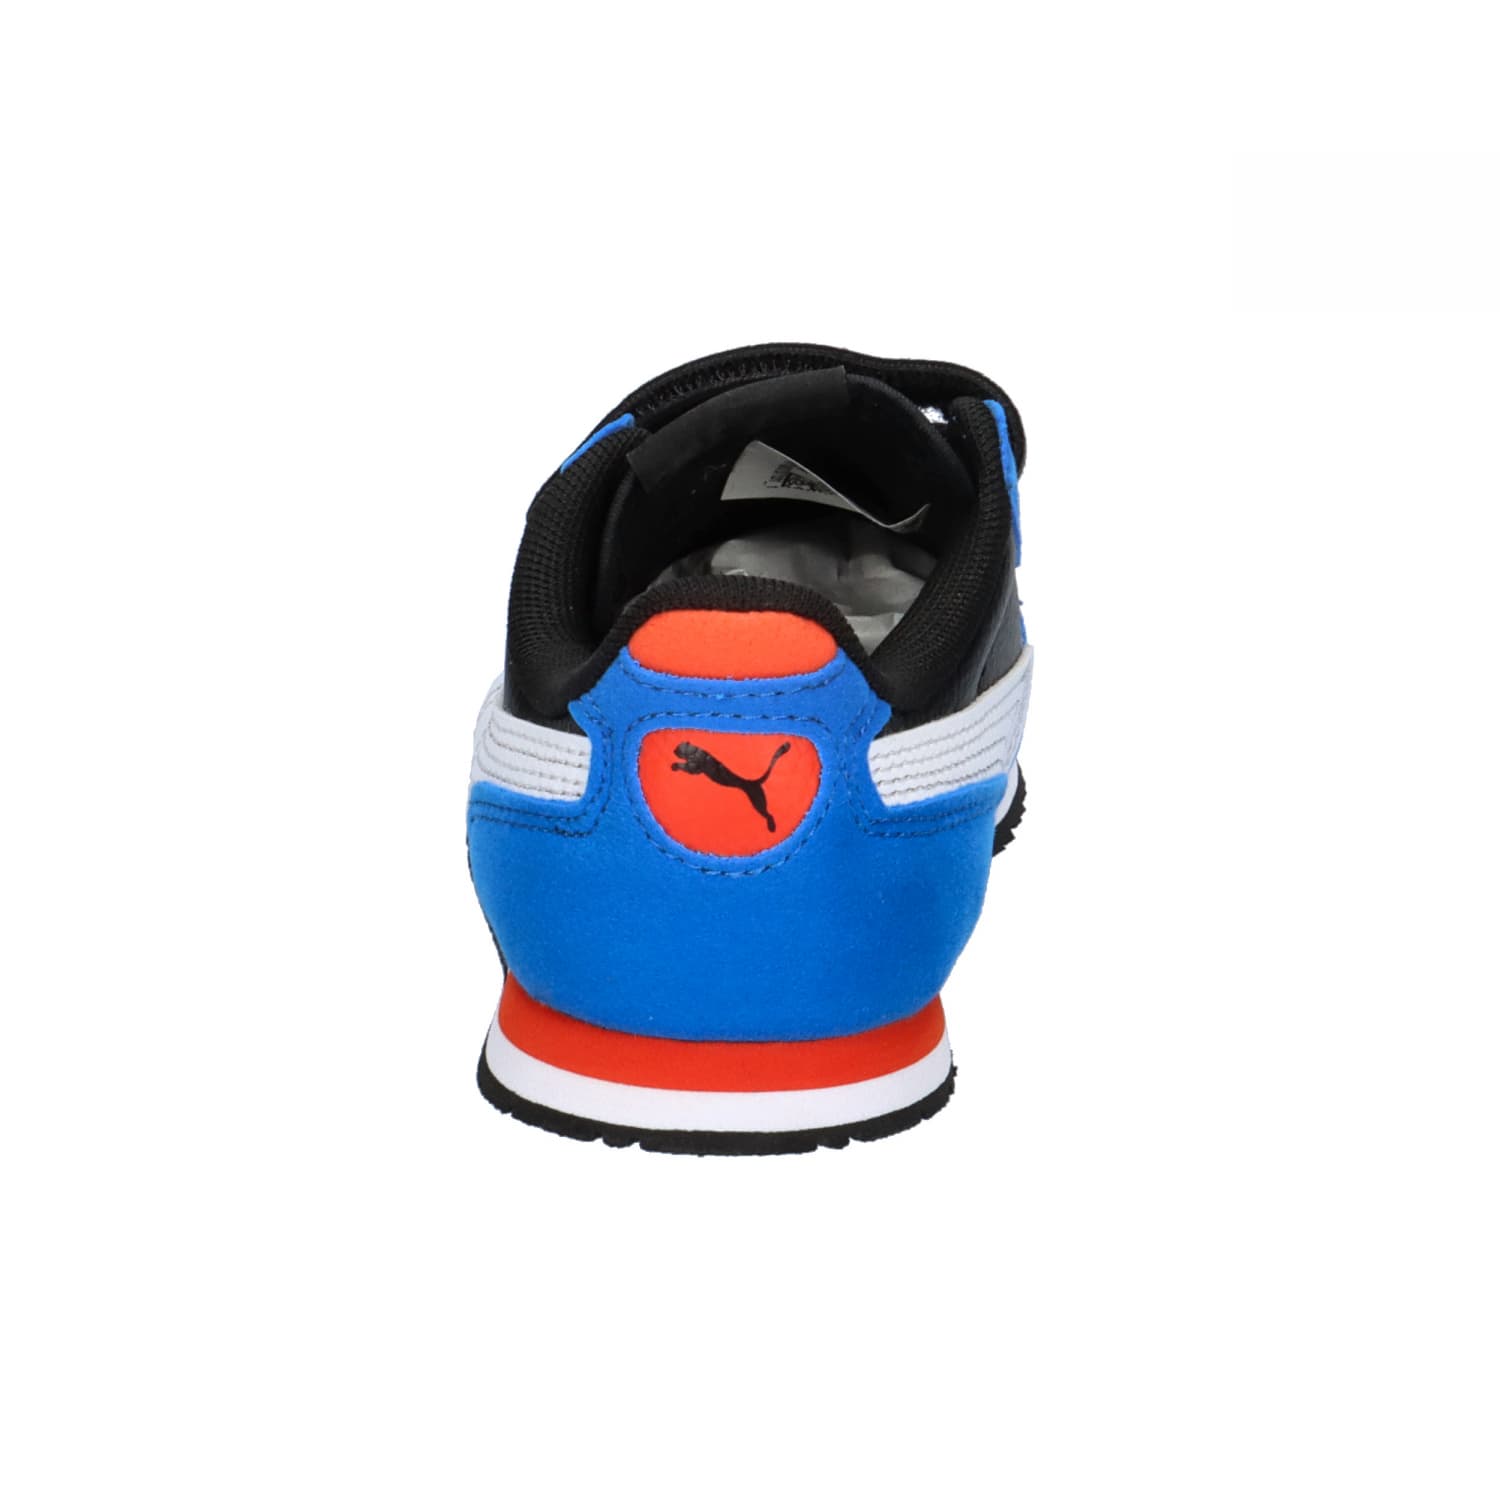 Sneaker Kinder SL Puma V Cabana | 20 Racer PS 383730 eBay